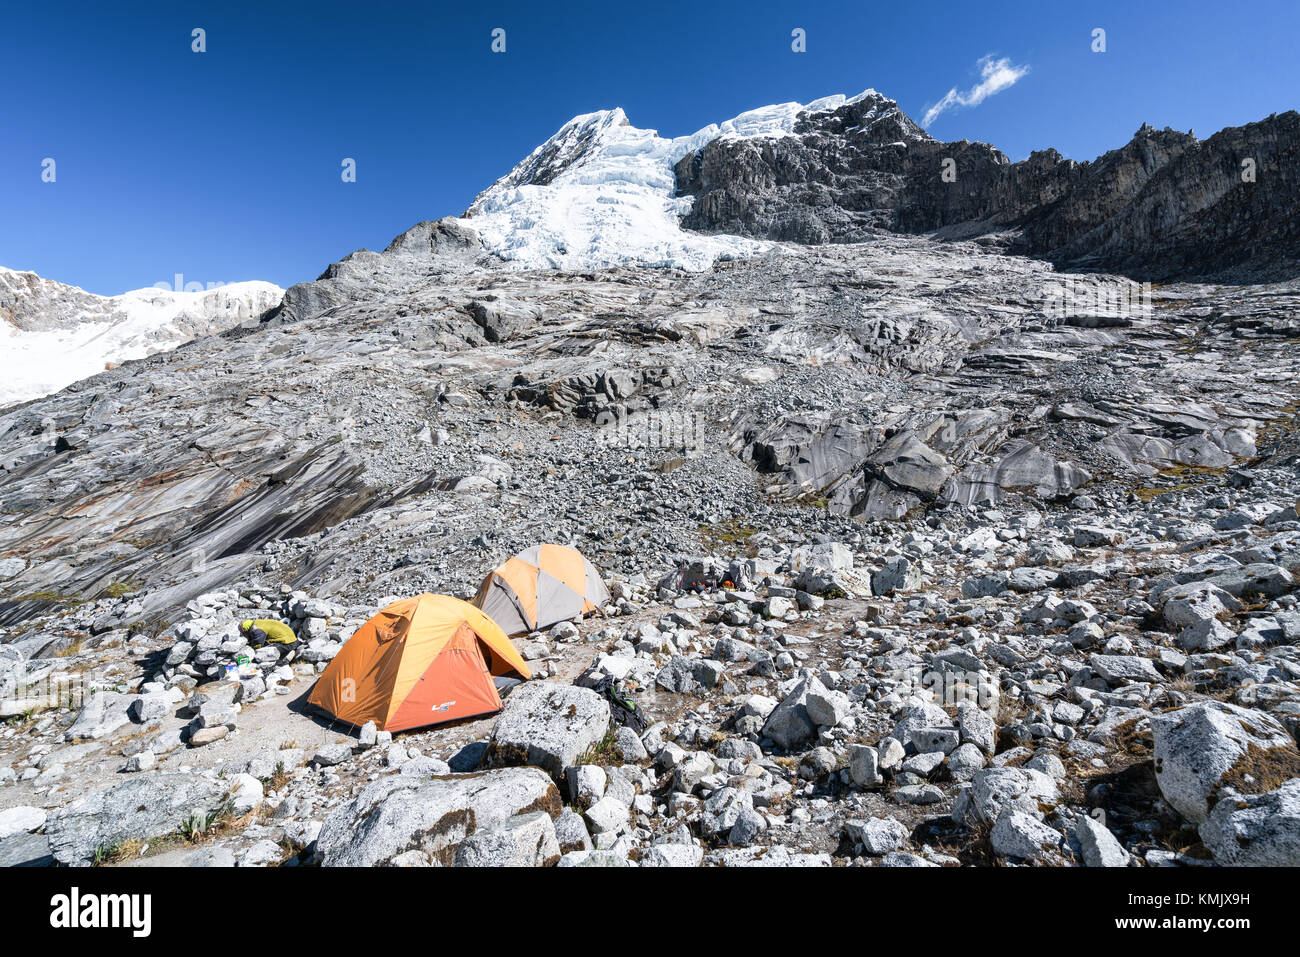 At high/moraine camp of Artesonraju mountain, Santa Cruz valley, Cordillera Blanca, Peru Stock Photo